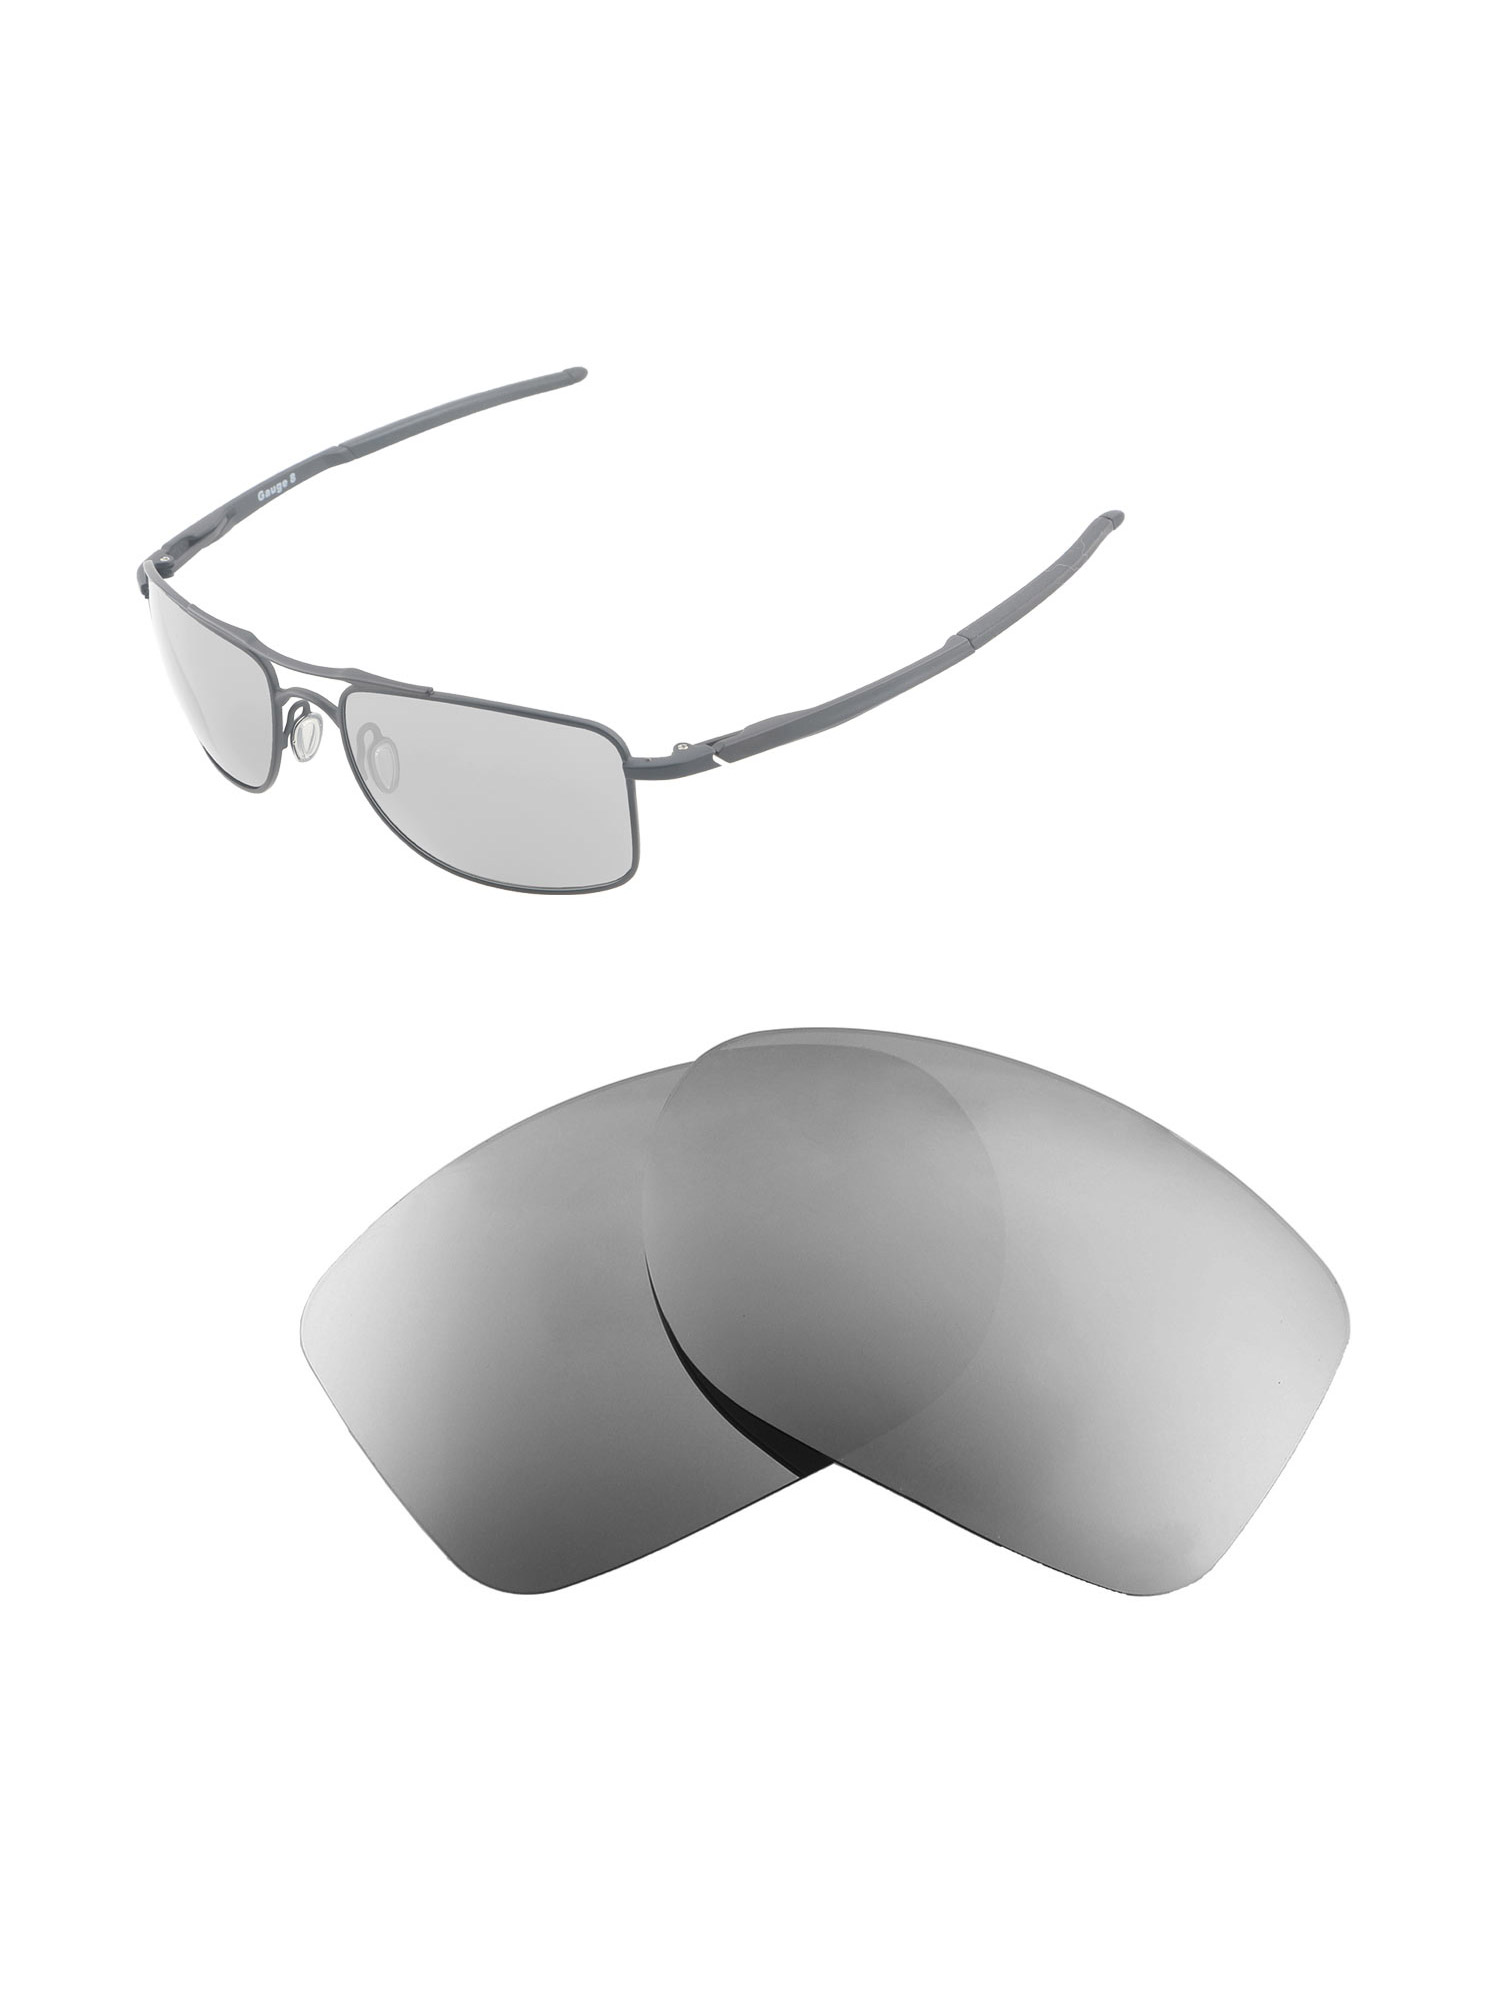 Walleva Titanium Polarized Replacement Lenses for Oakley Gauge 8 M Sunglasses - image 5 of 7